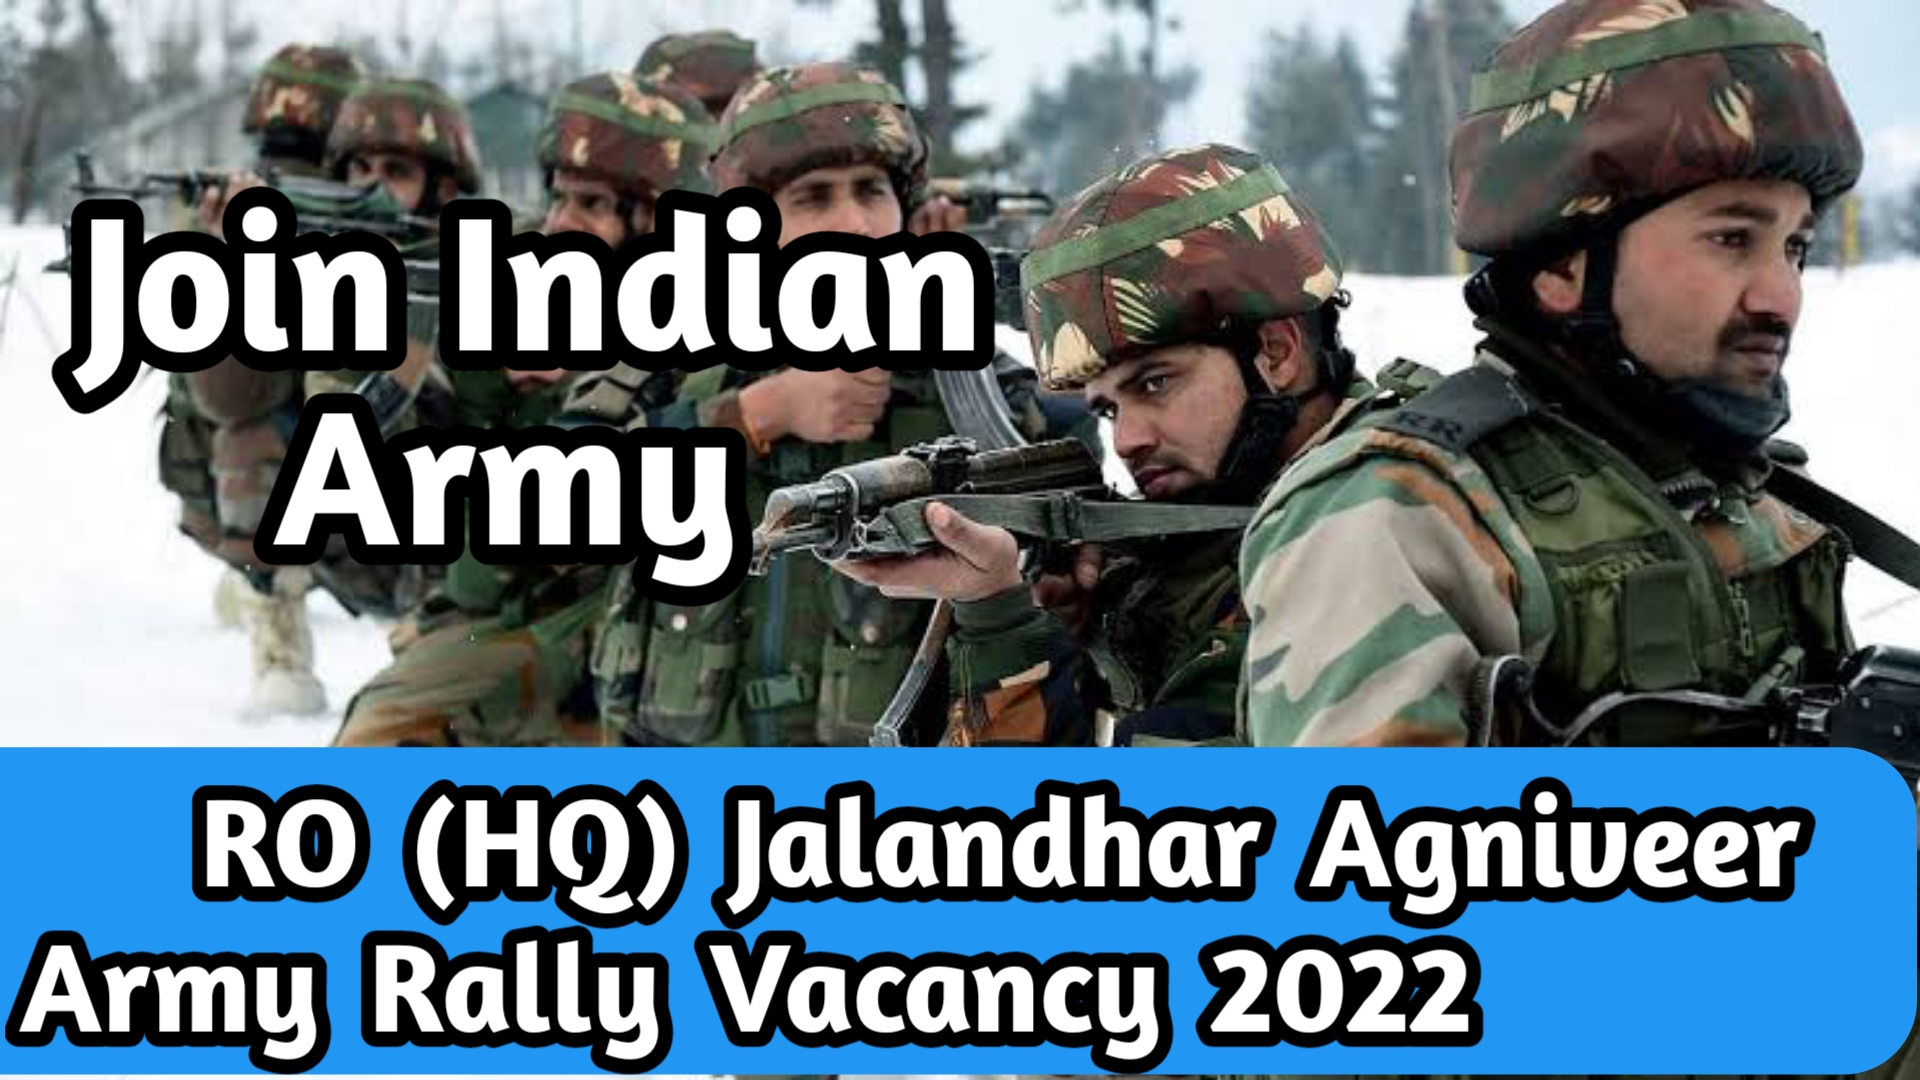 RO (HQ) Jalandhar Agniveer Army Rally Vacancy 2022